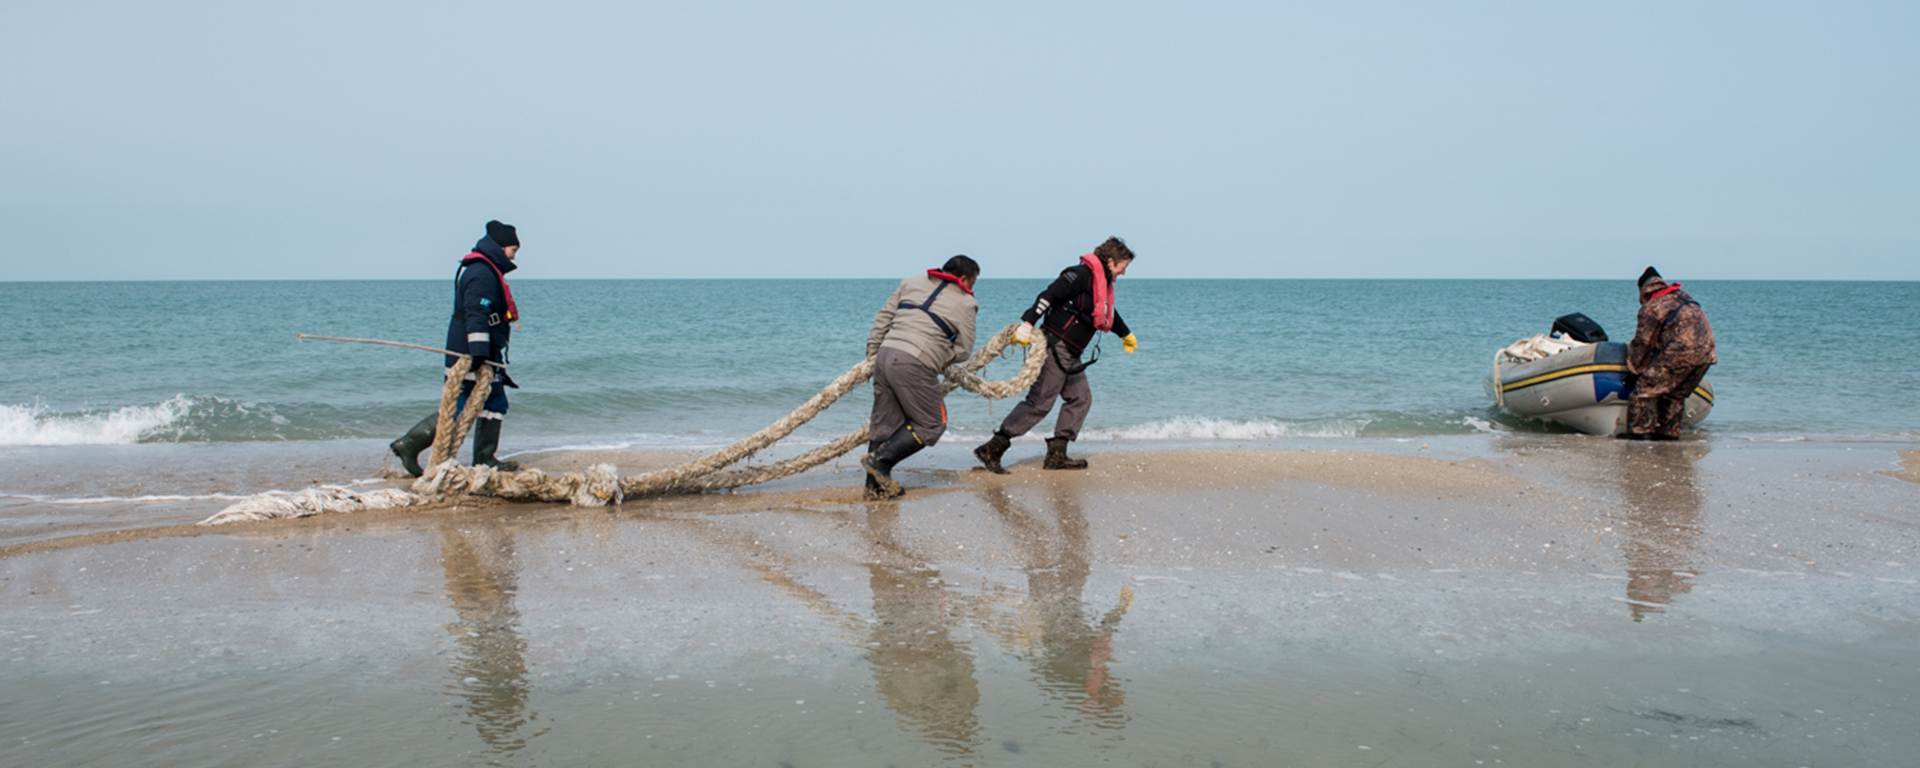 Marine debris removal in caspian sea